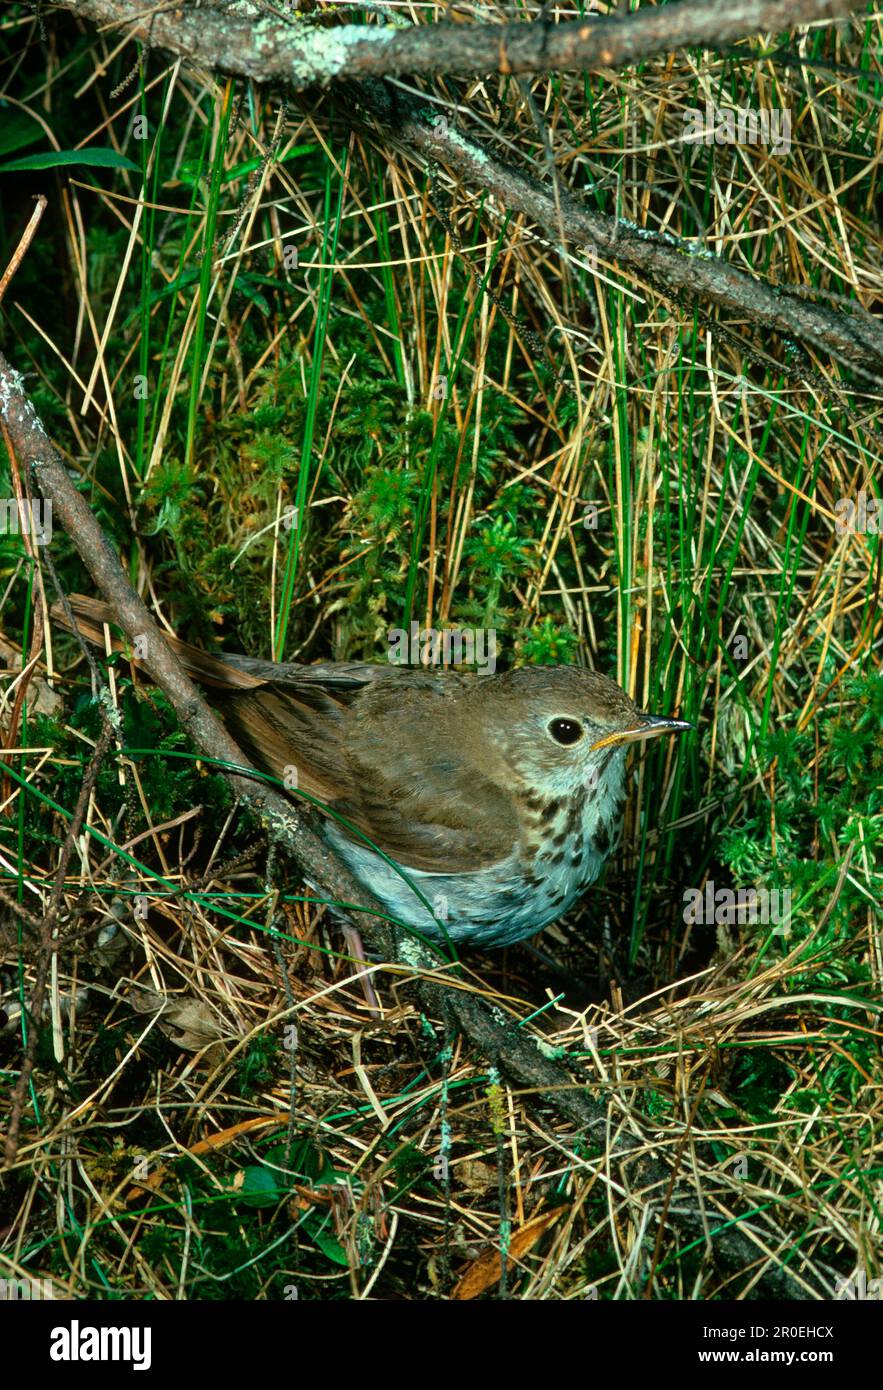 Hermit thrush (Catharus guttatus), Hermit Thrushes, Songbirds, Animals, Birds, Hermit Thrush close-up, perched in vegetation Stock Photo